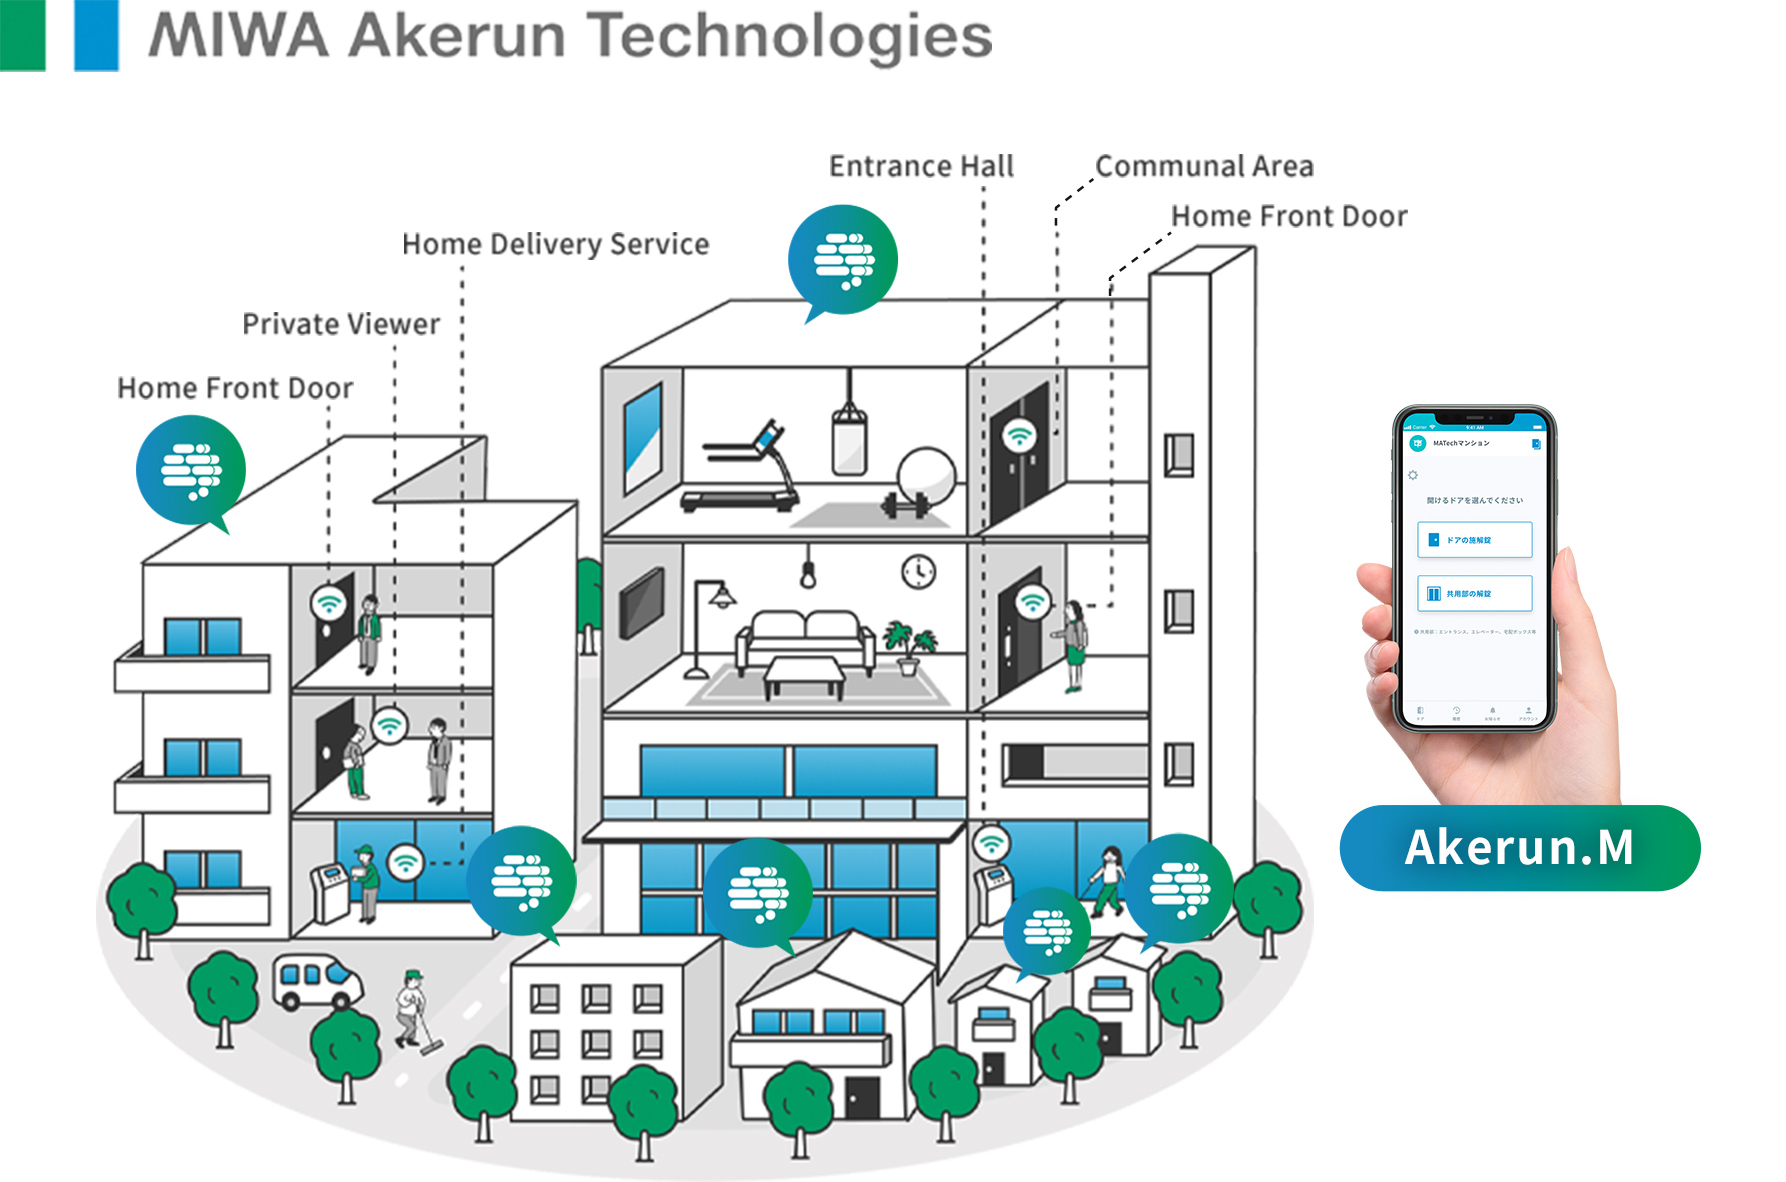 MIWA Akerun Technologies